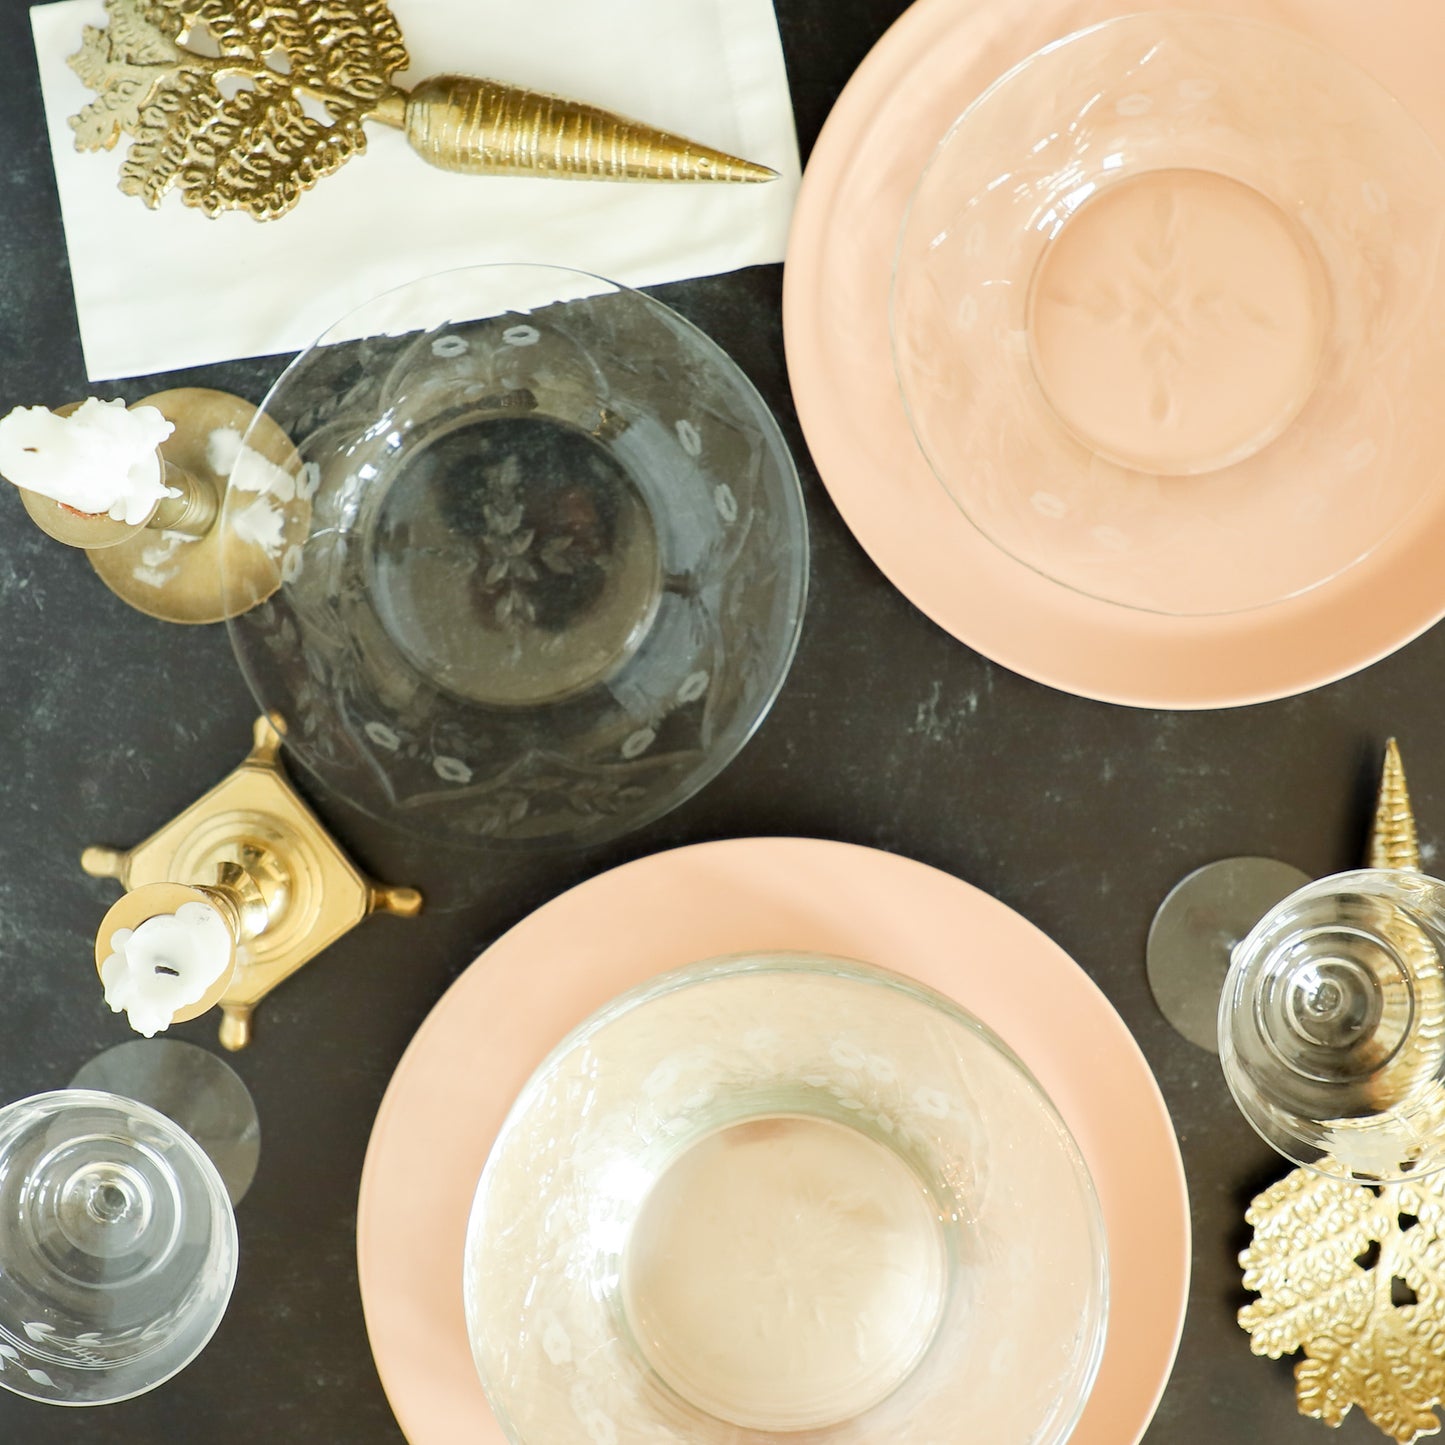 Salad Plates: Stoneware, Ceramic, Glass